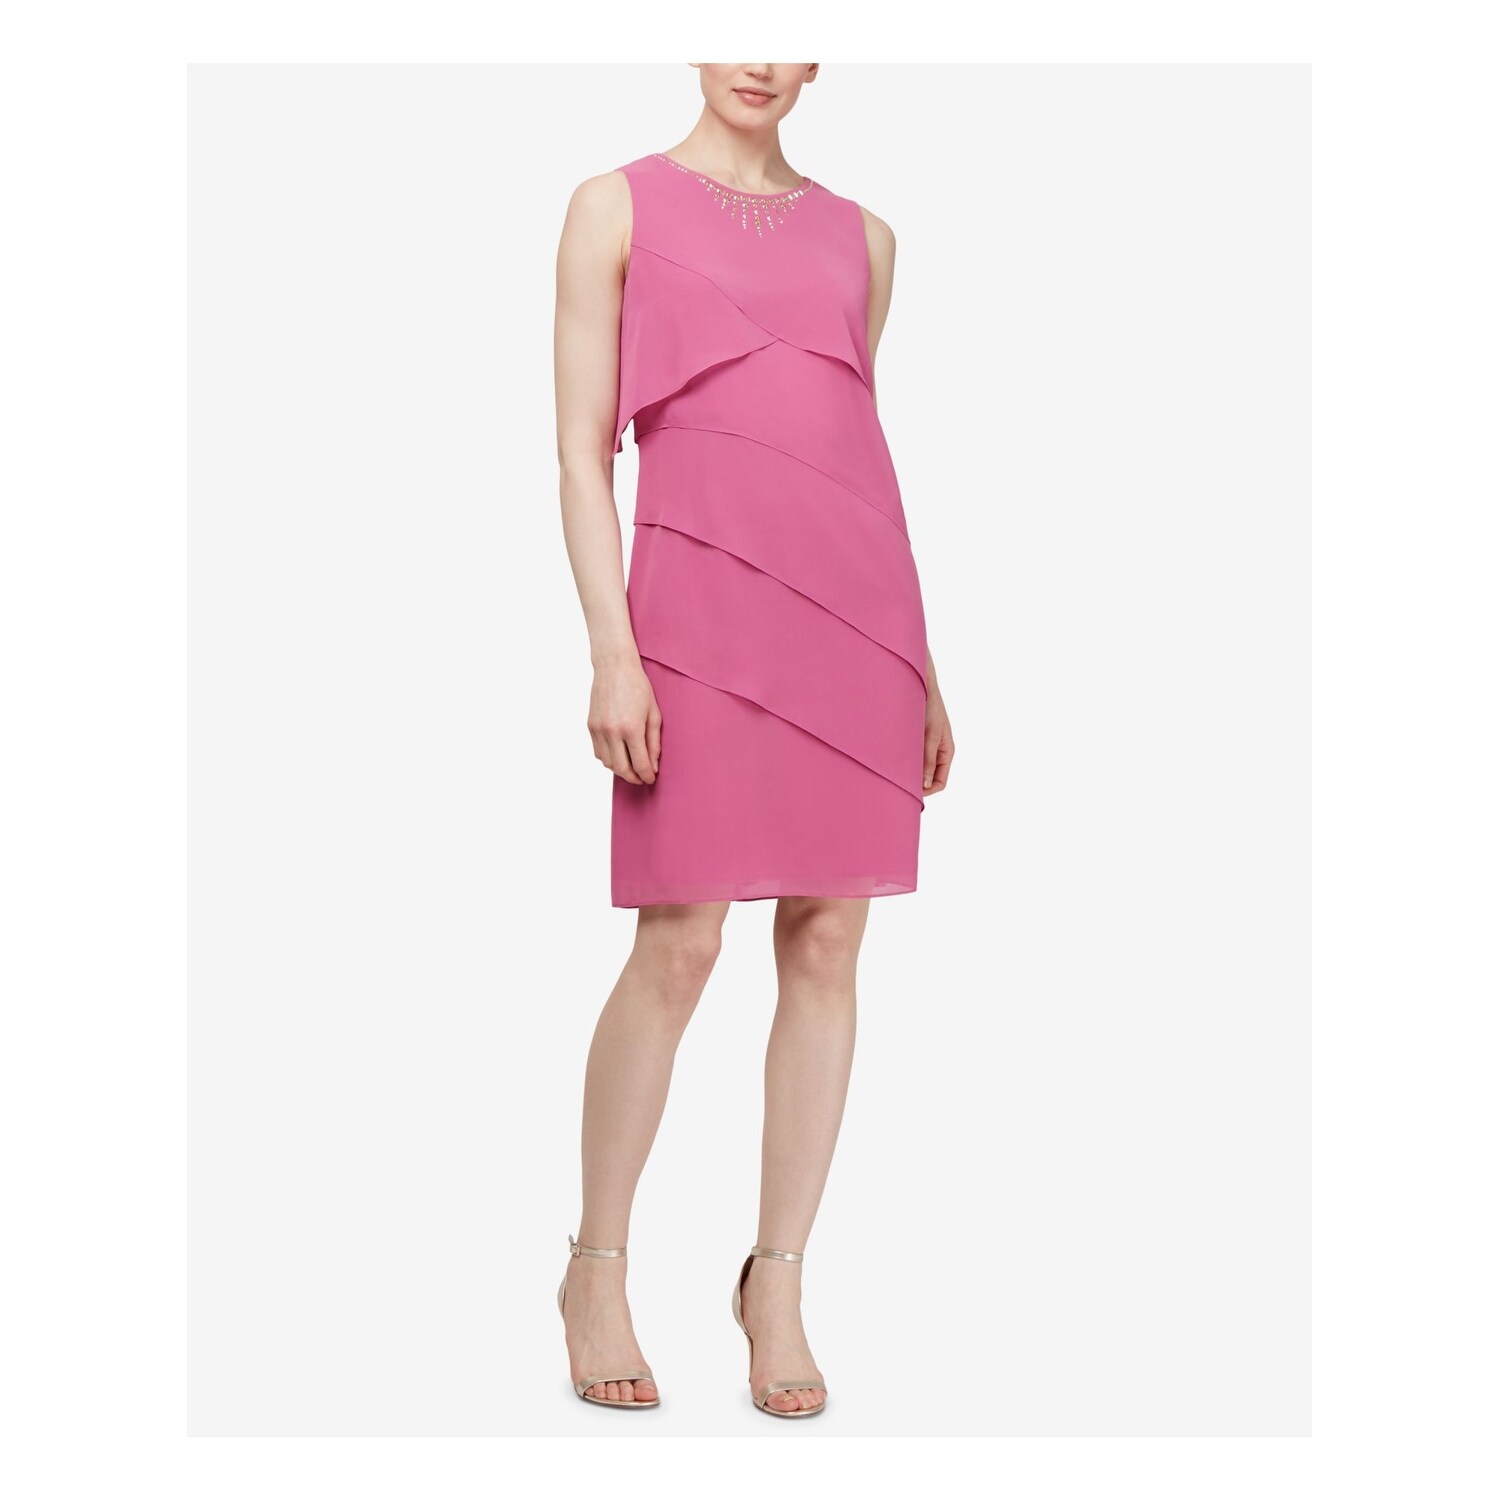 pink dress size 18